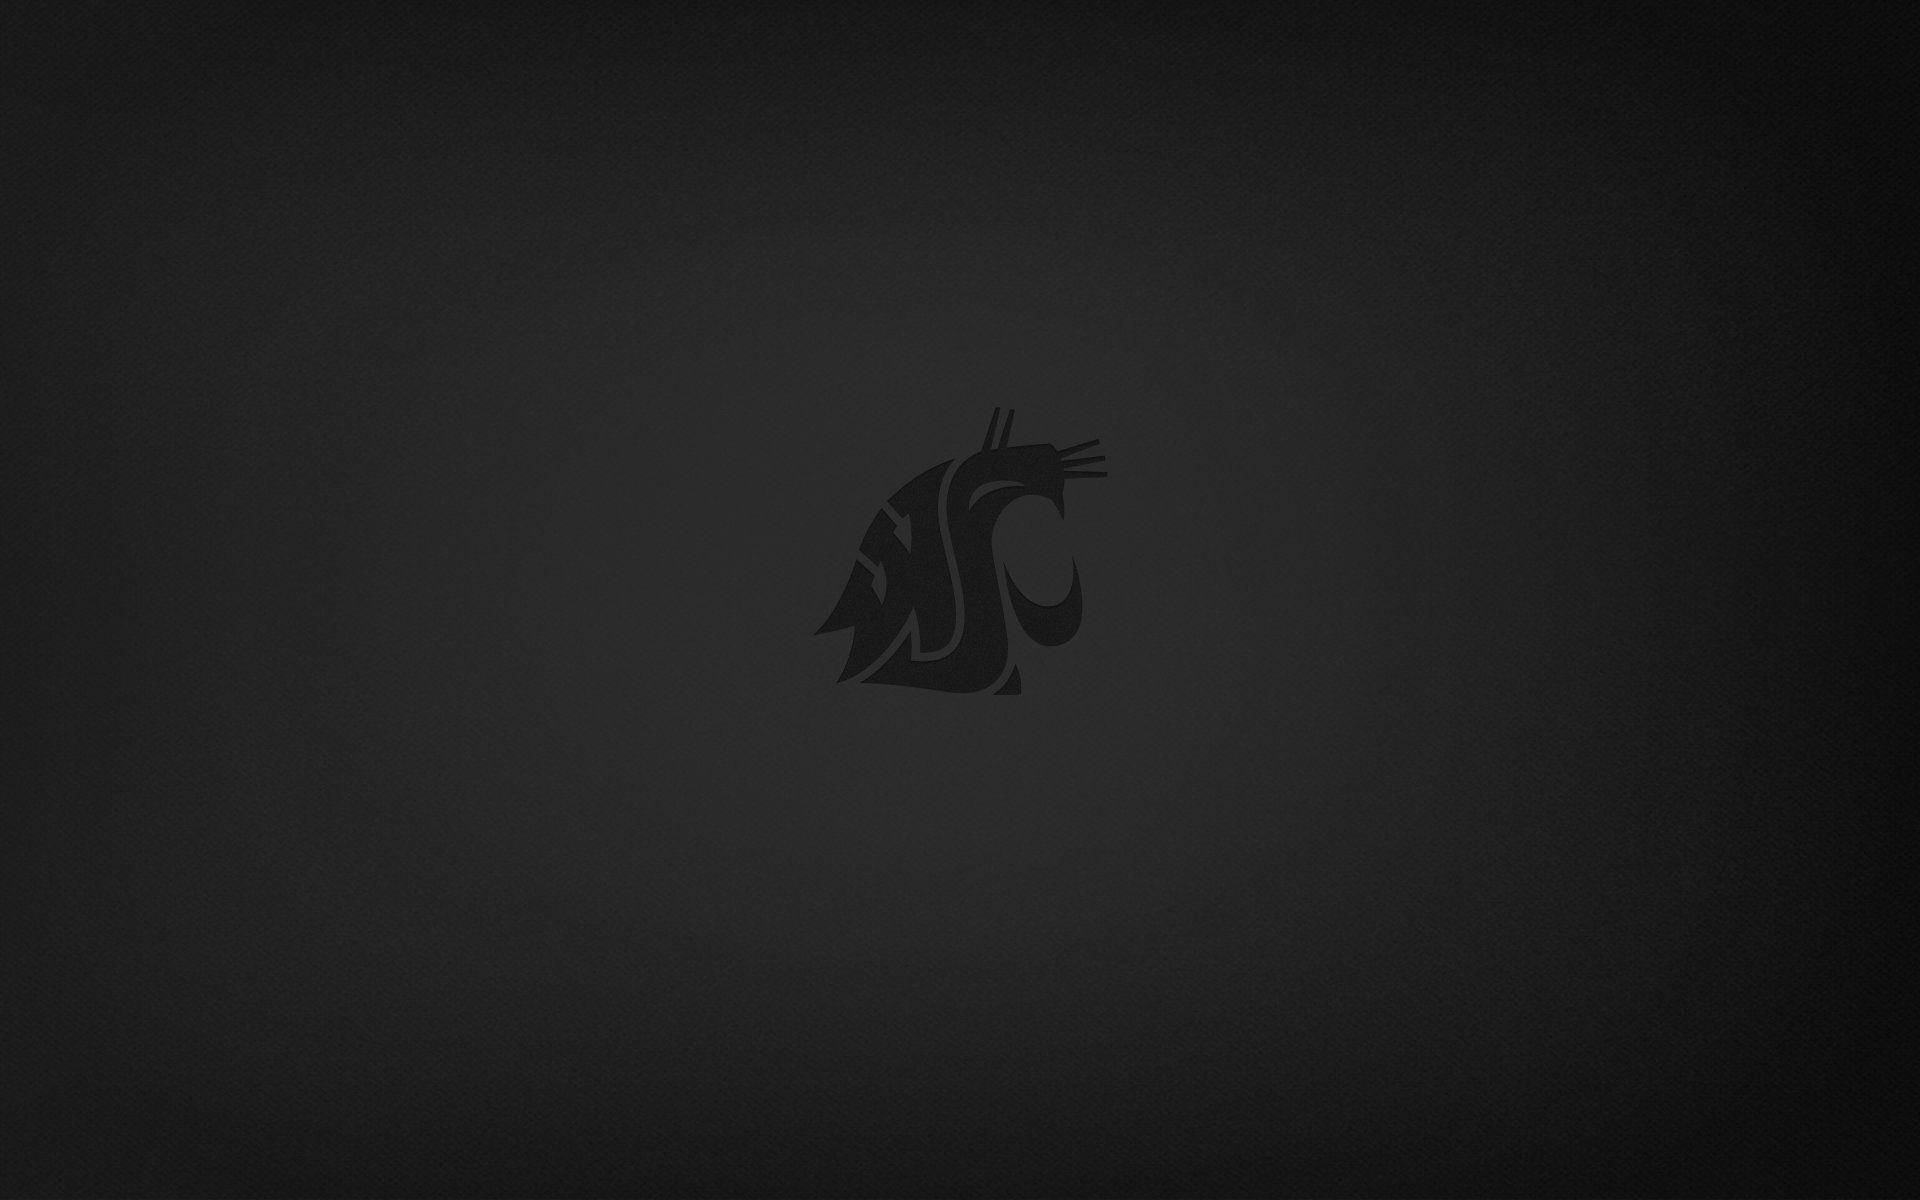 Schwarzescougars-logo Der Washington State University. Wallpaper